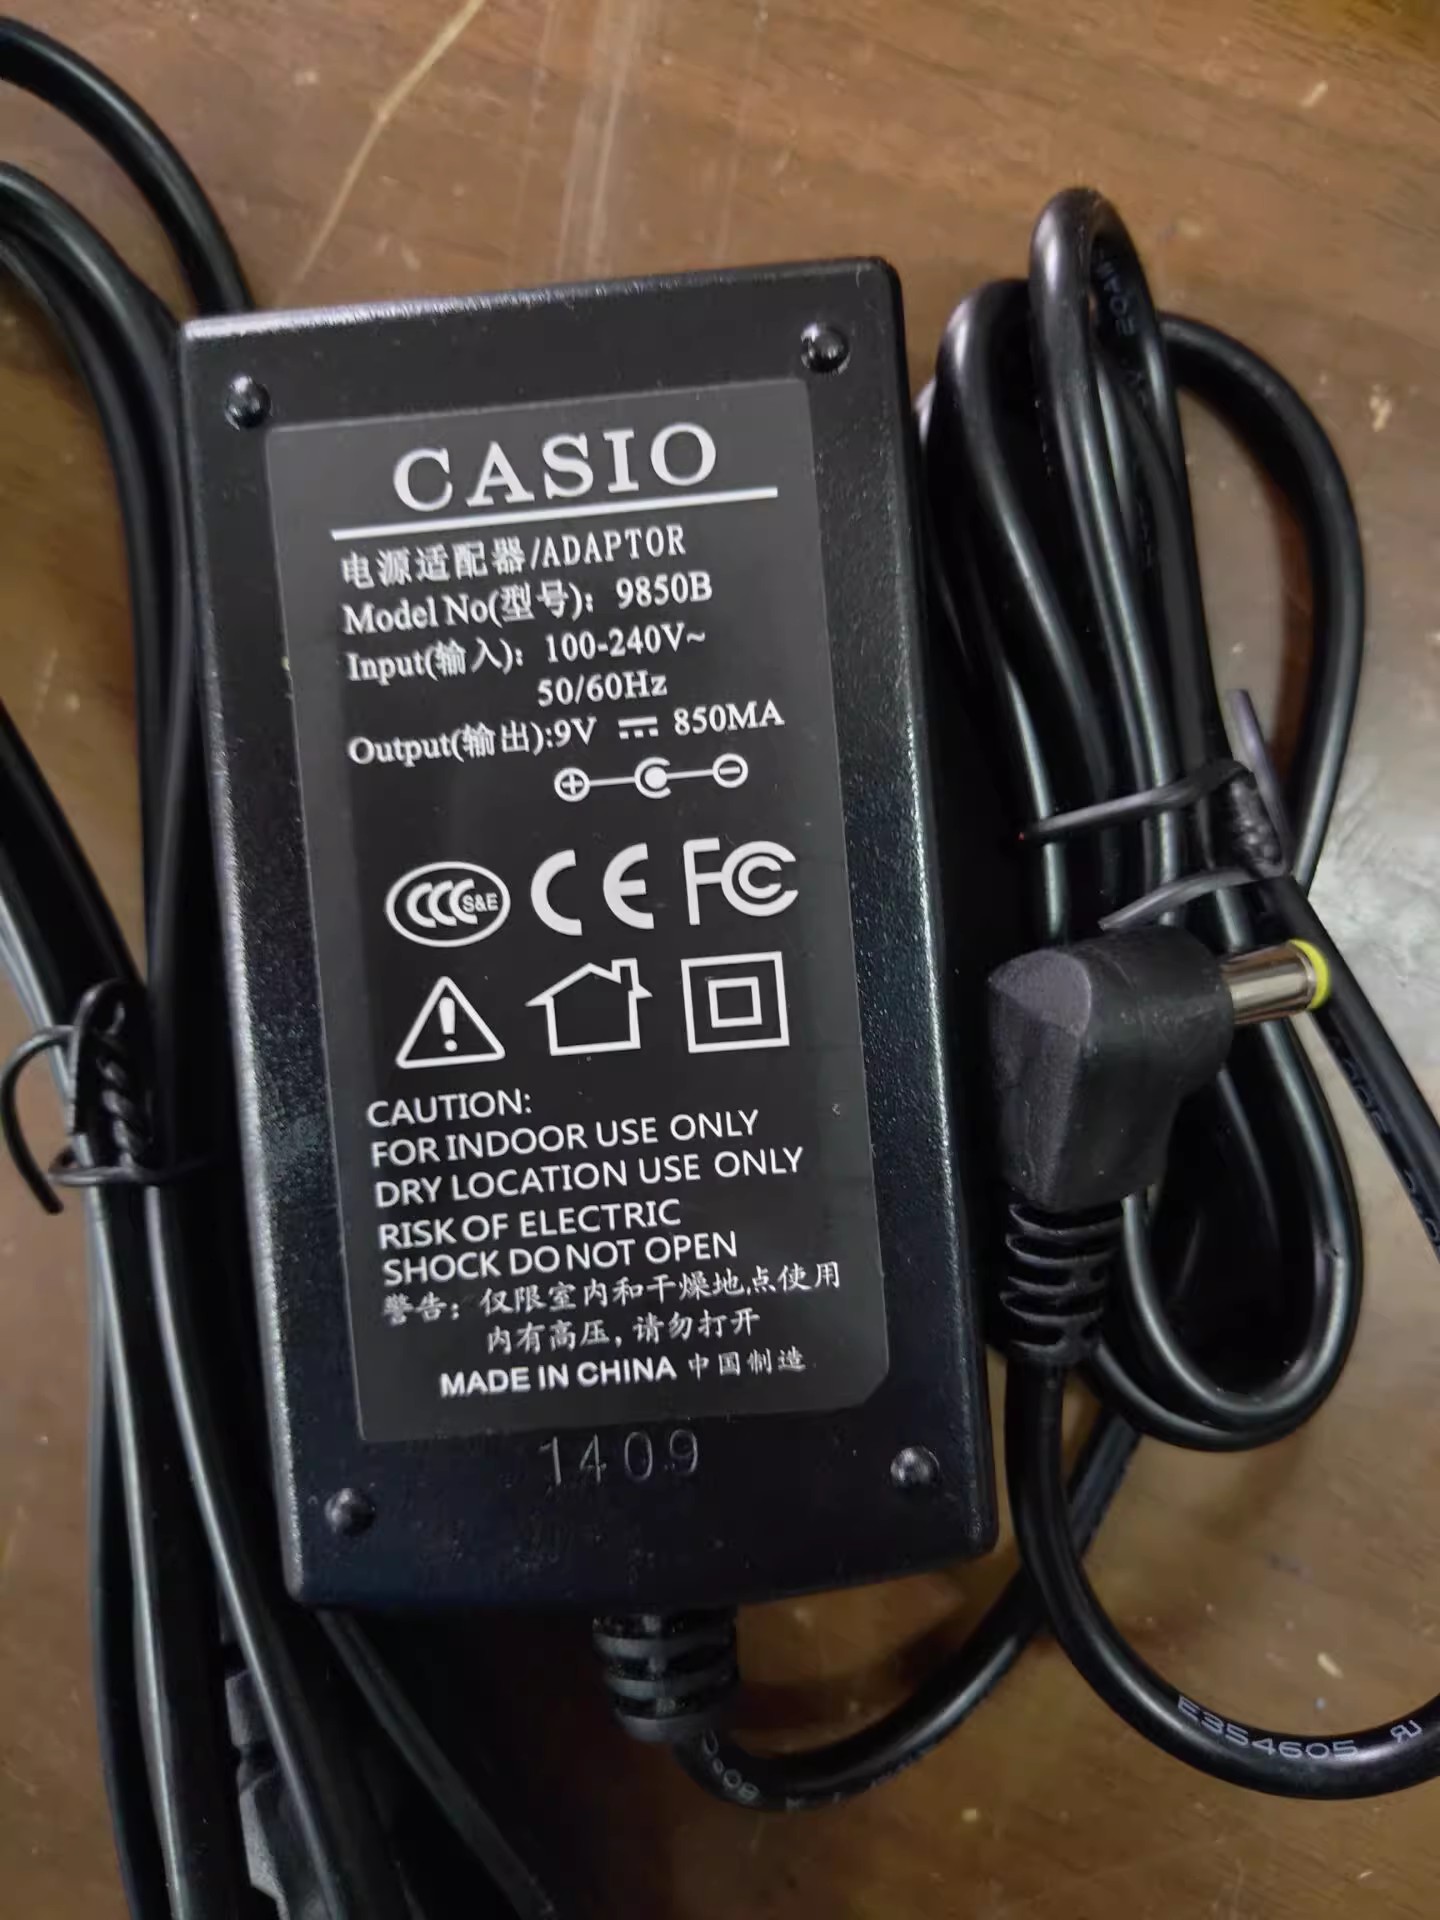 *Brand NEW* 9850B CT-310 CASIO CT-360 CT-640 9V 850MA AC DC ADAPTHE POWER Supply